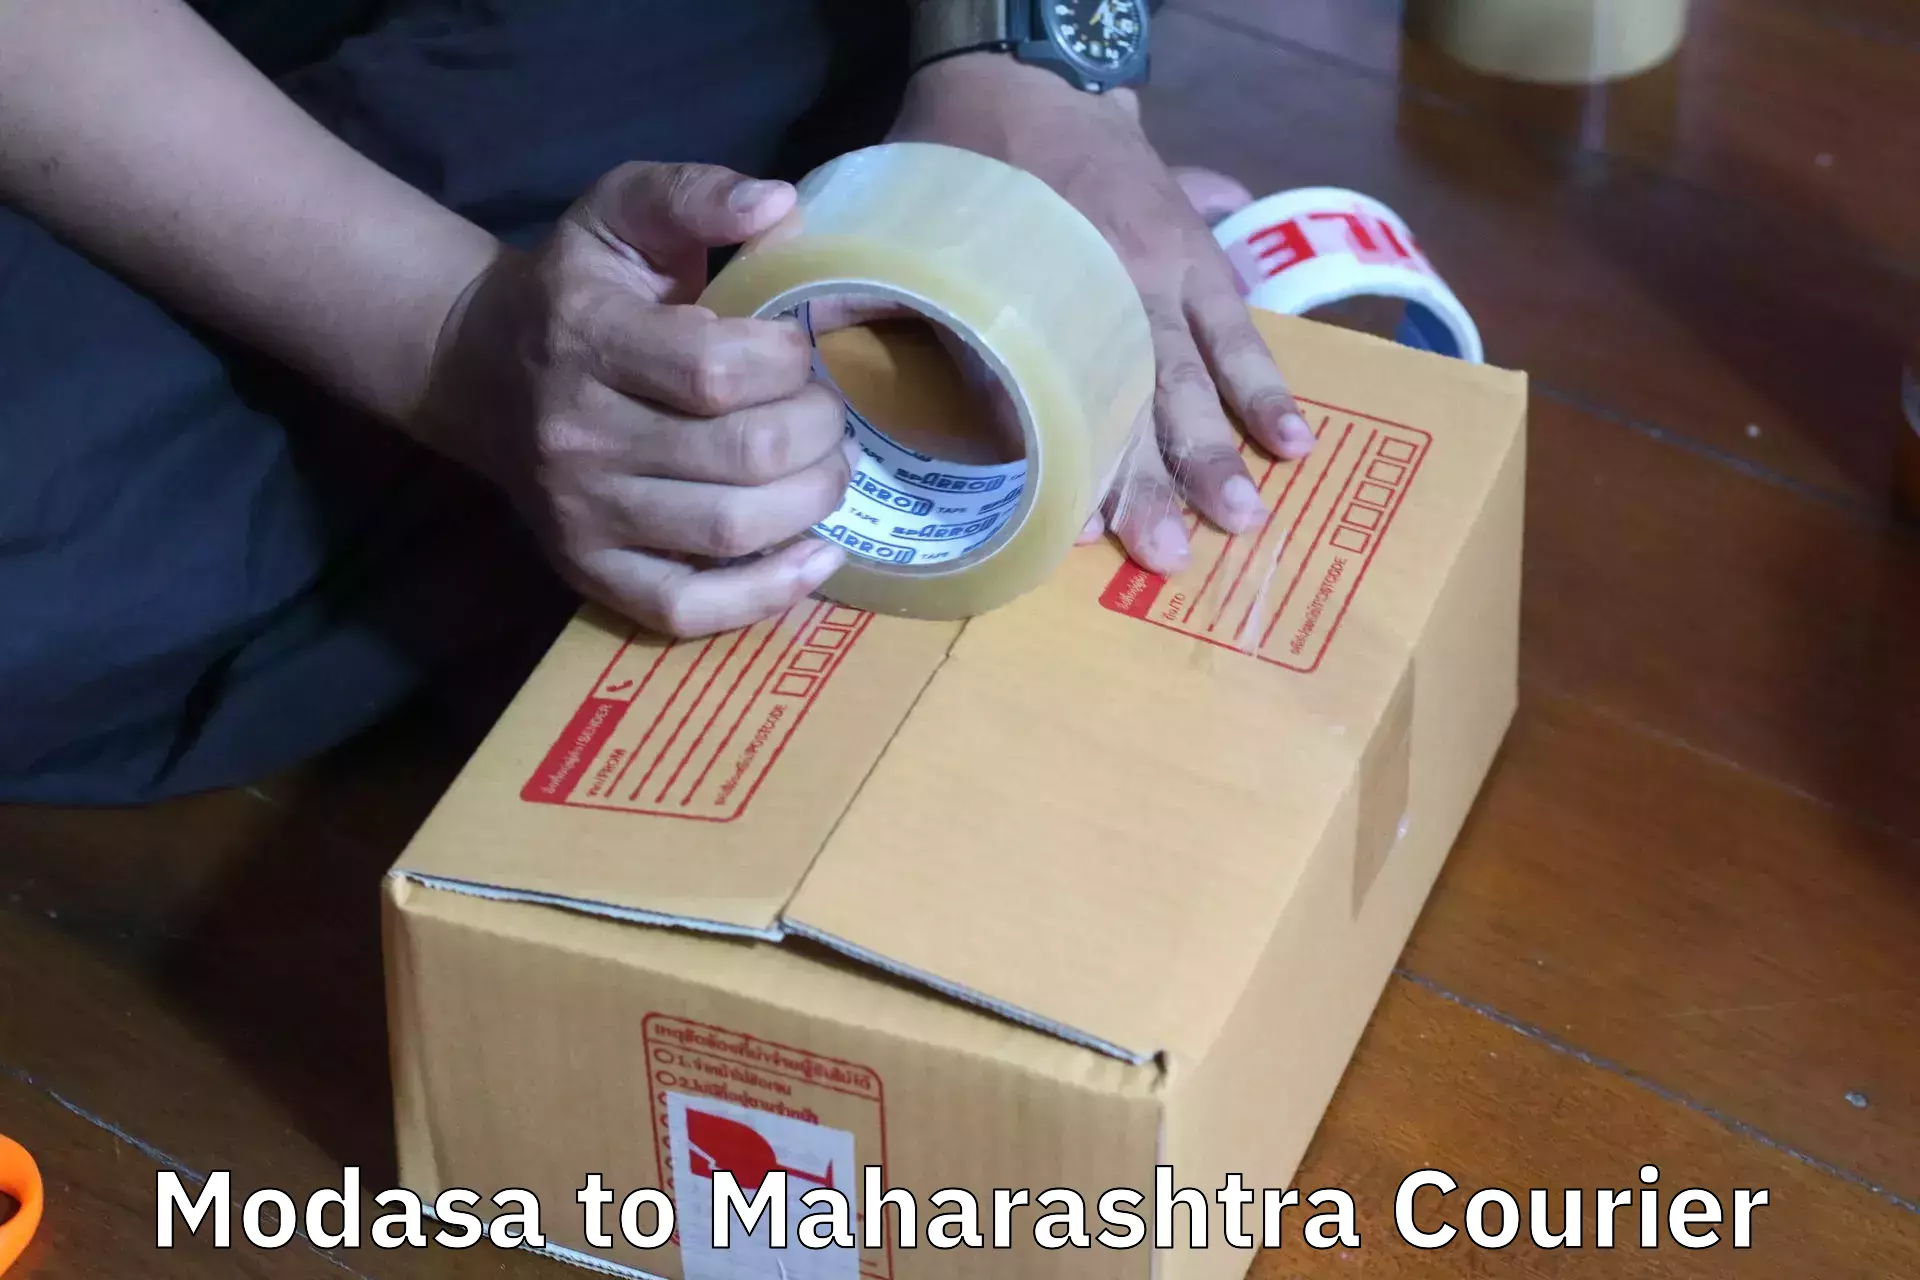 Furniture moving experts Modasa to Maharashtra